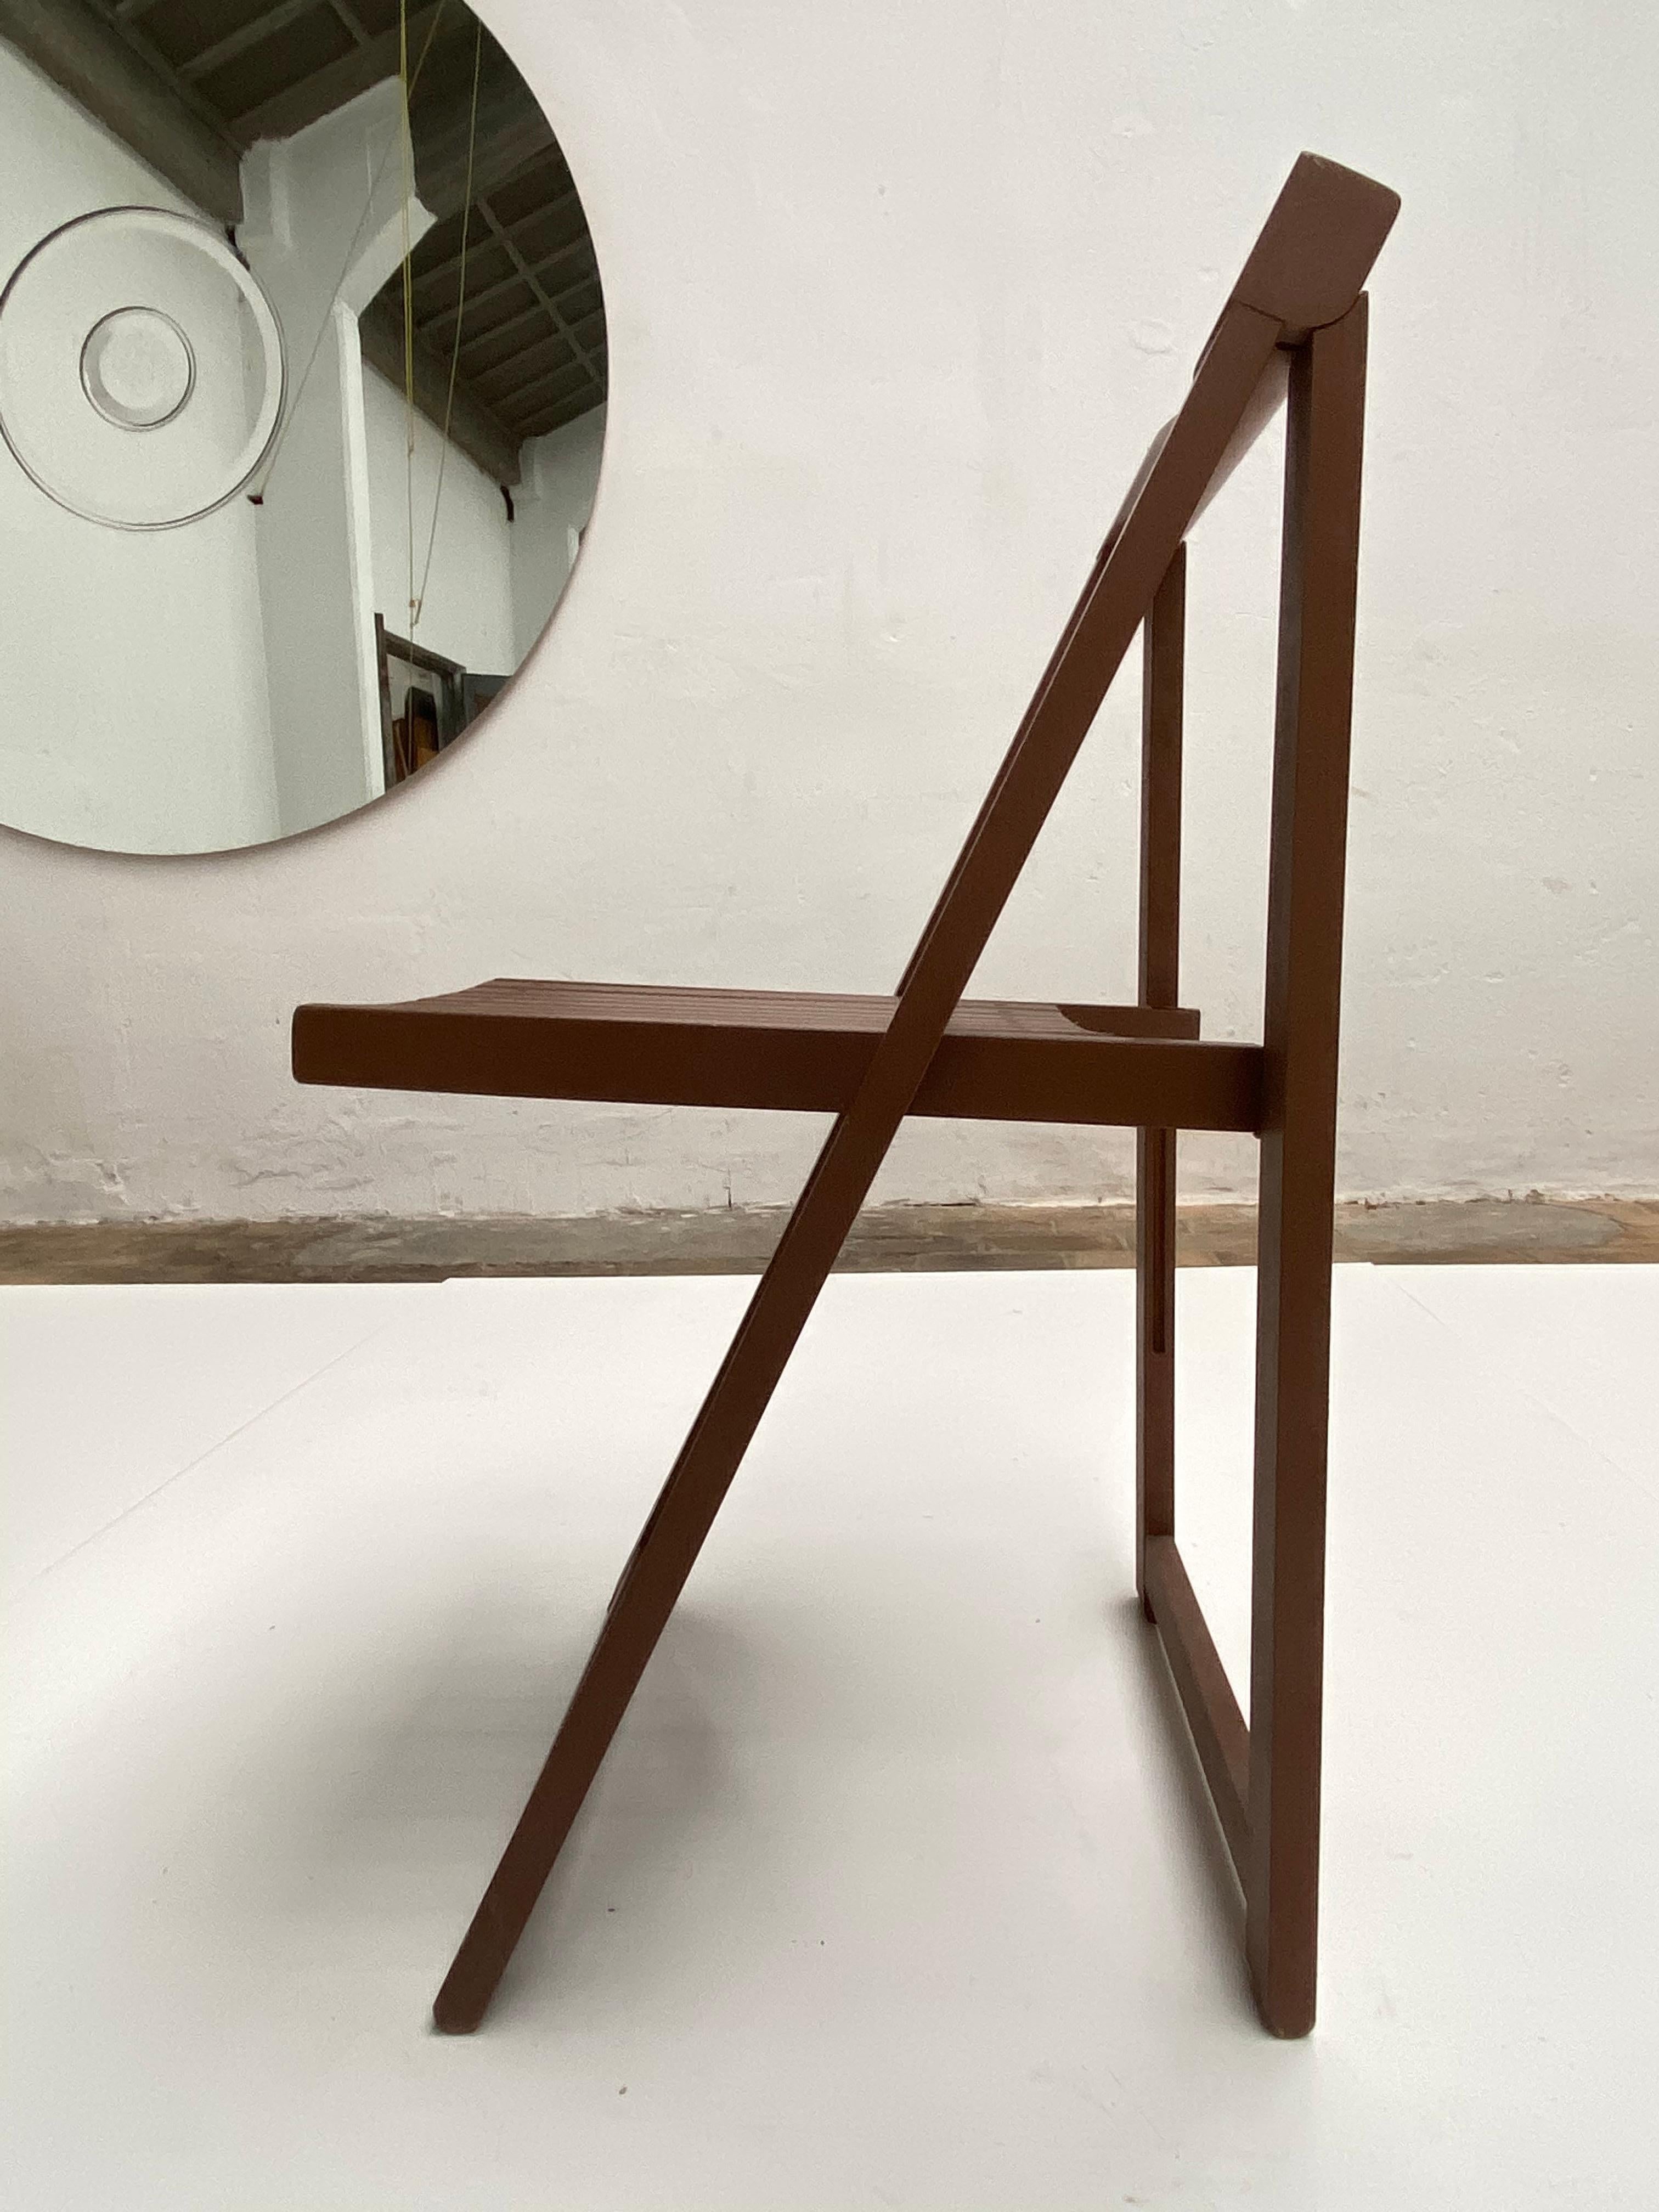 Stained 6 Aldo Jacober Folding Chairs Alberto Bazzani 1966 Italy, Low Volume Storage